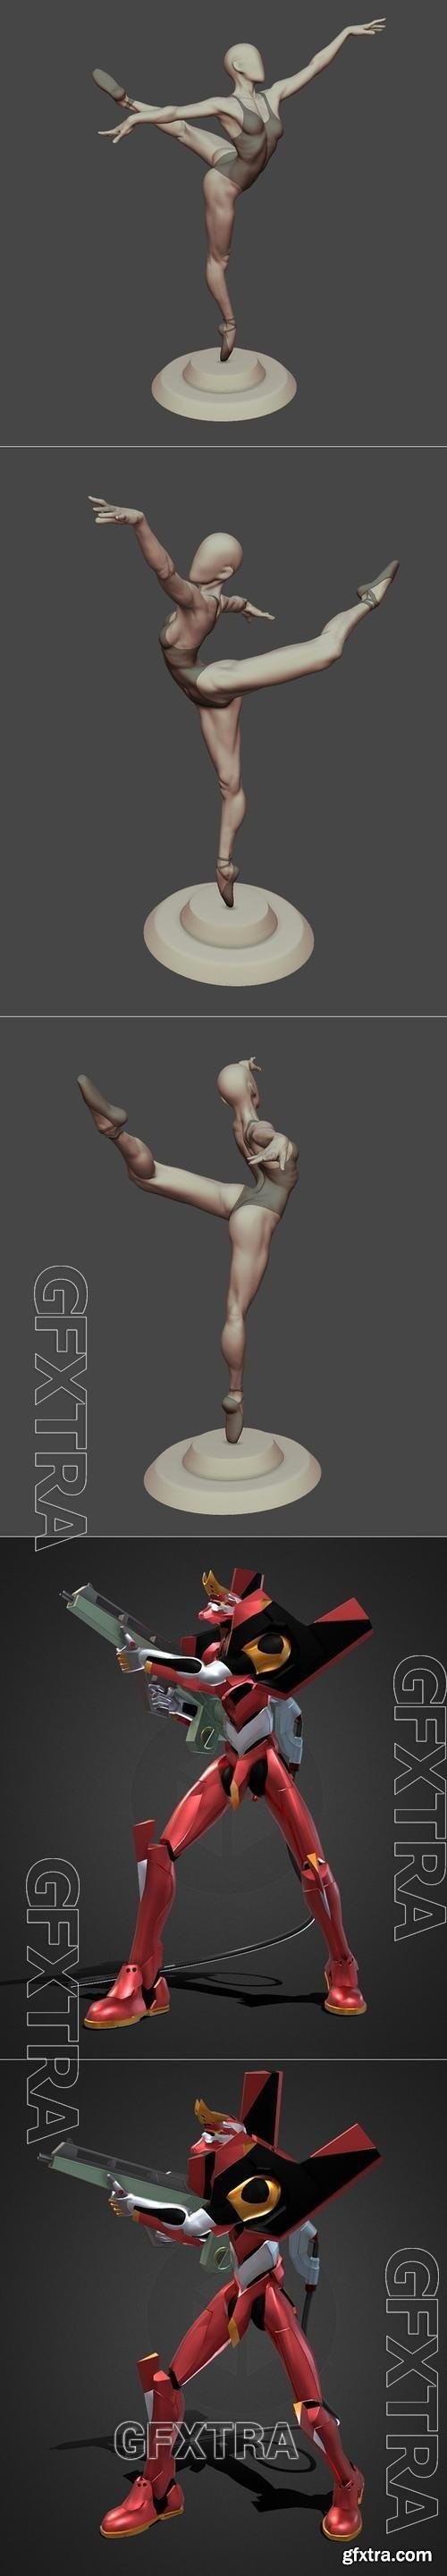 Ballerina and Evangelion Unit 02 3D